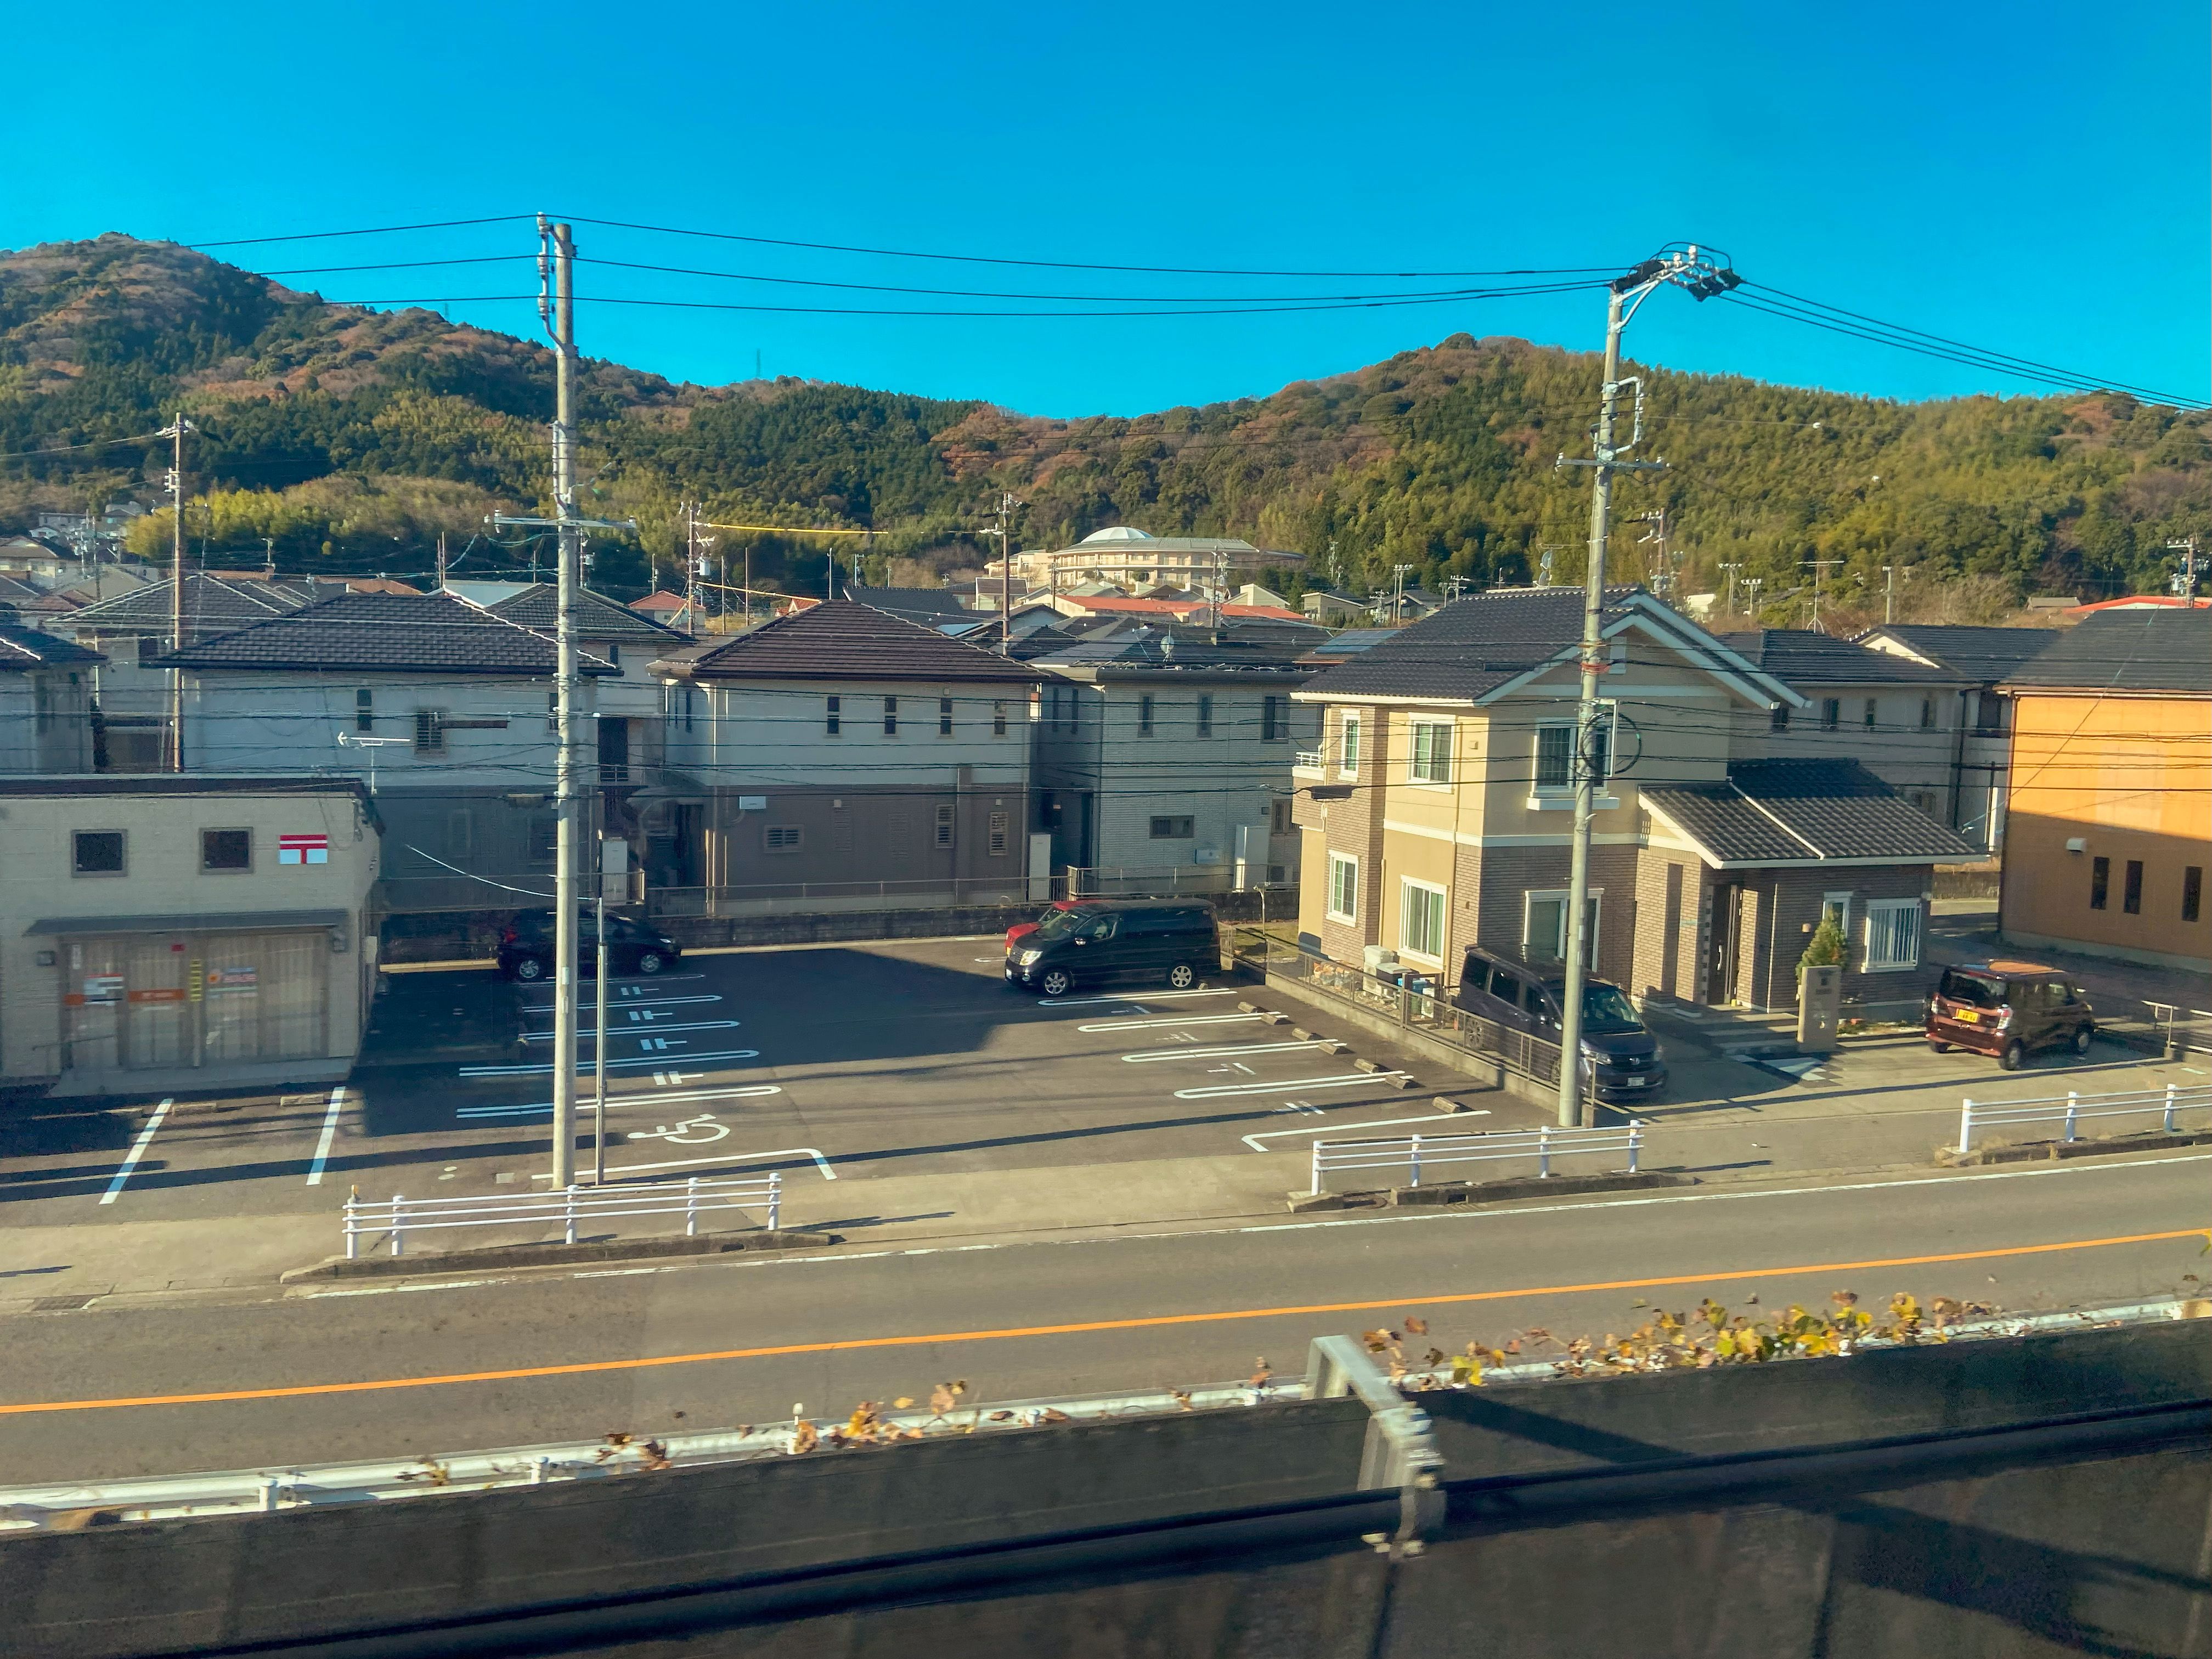 A town close to the Shinkansen rails